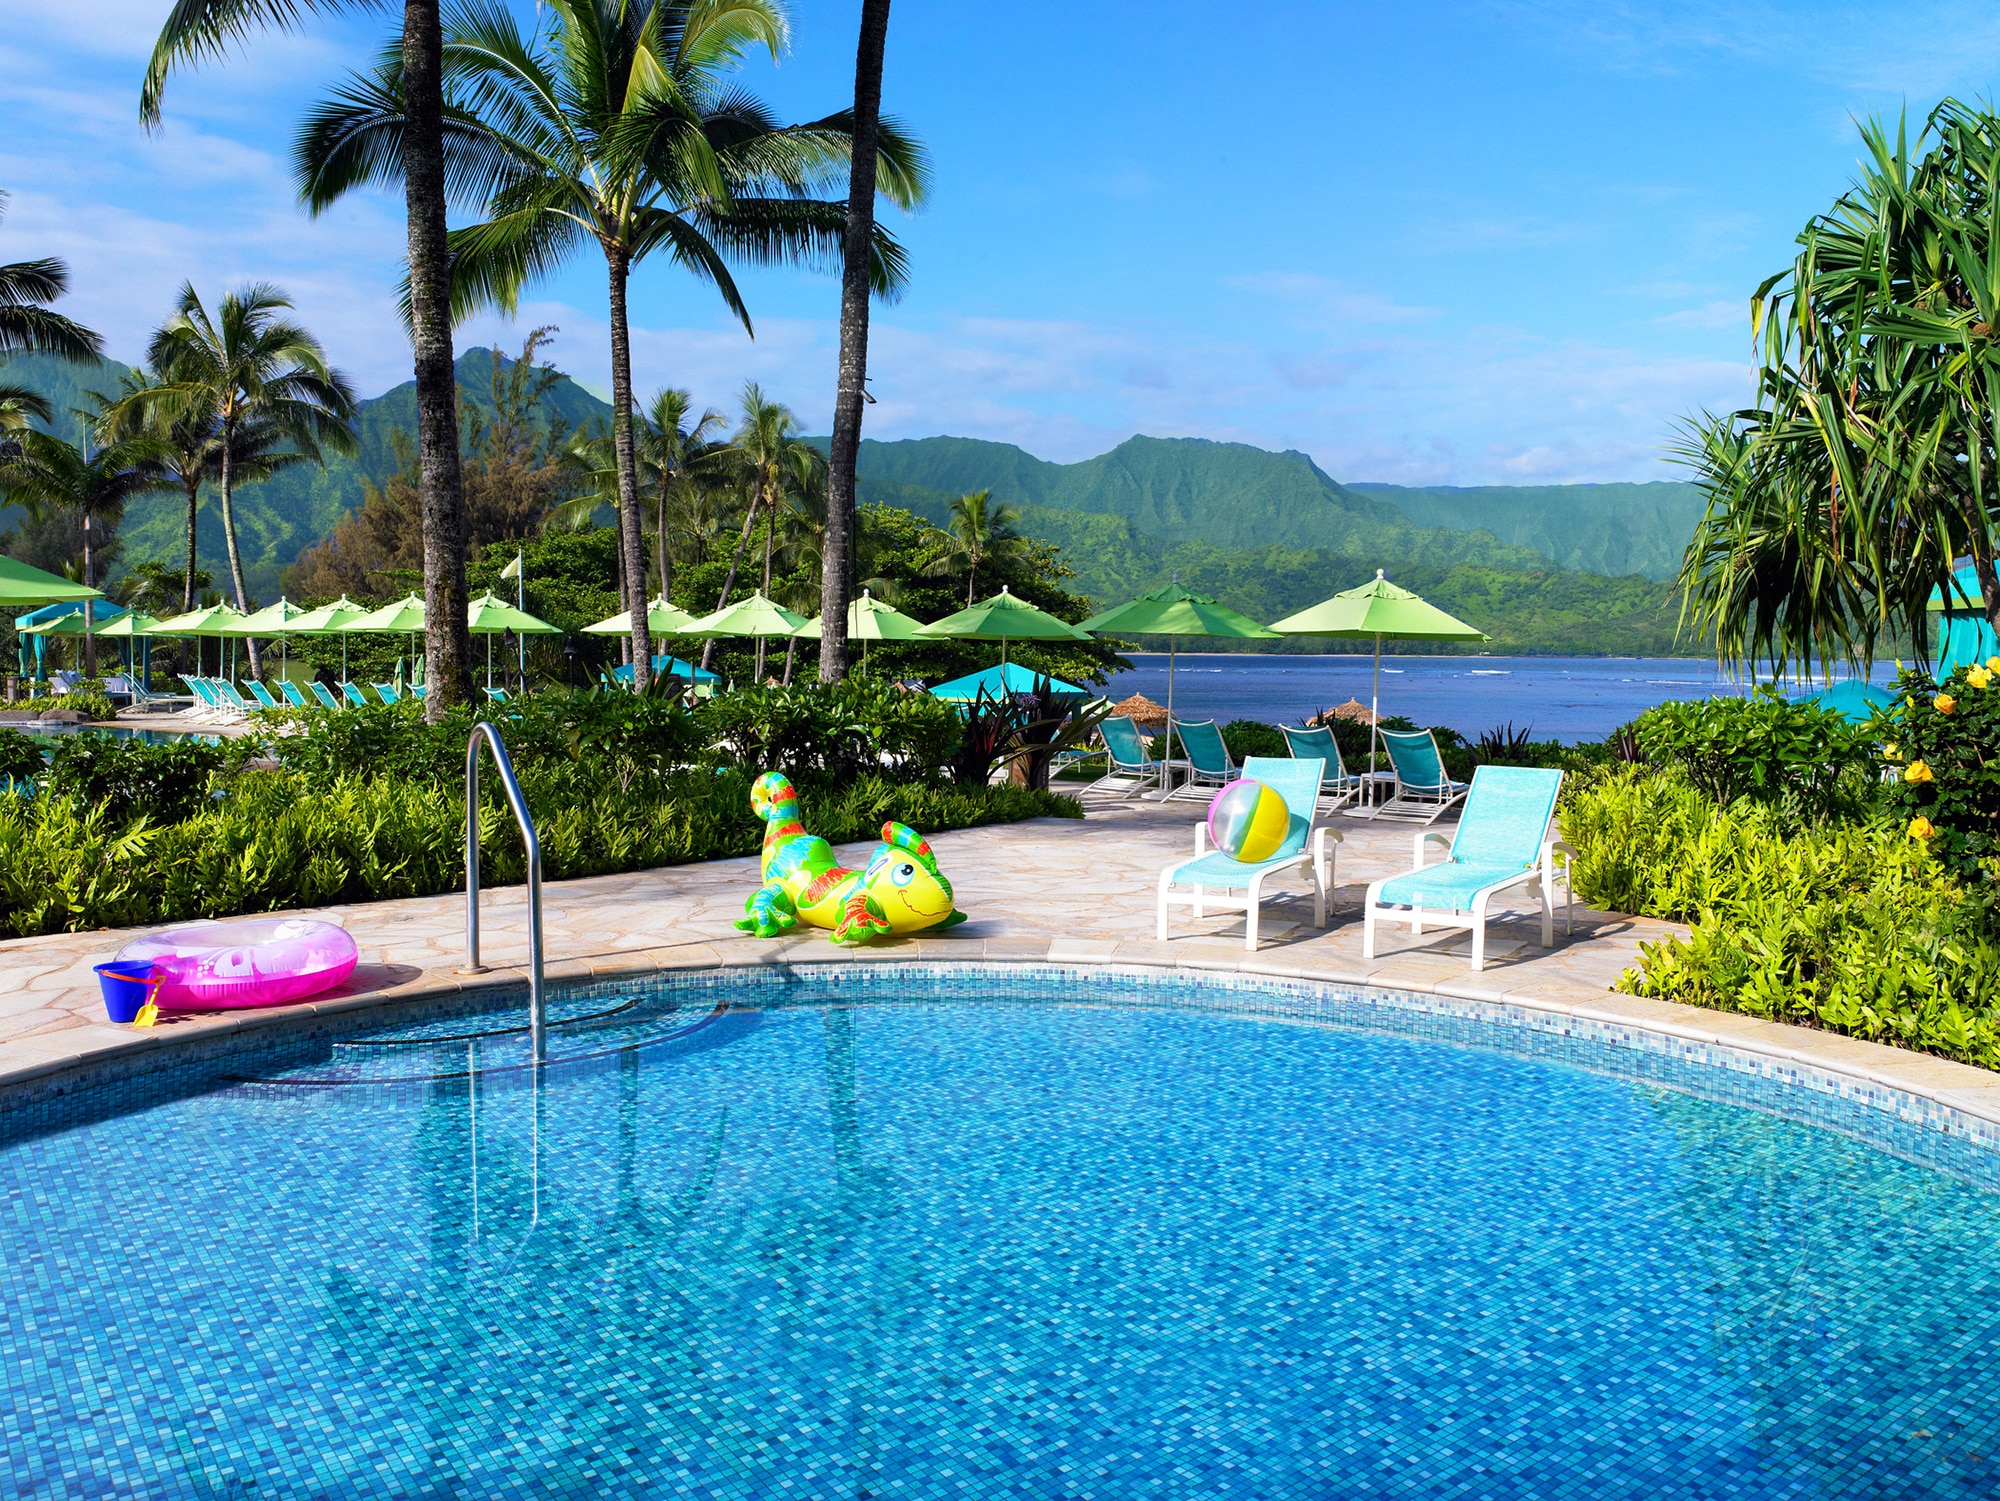 Best Kauai Resorts for Families - Princeville Resort